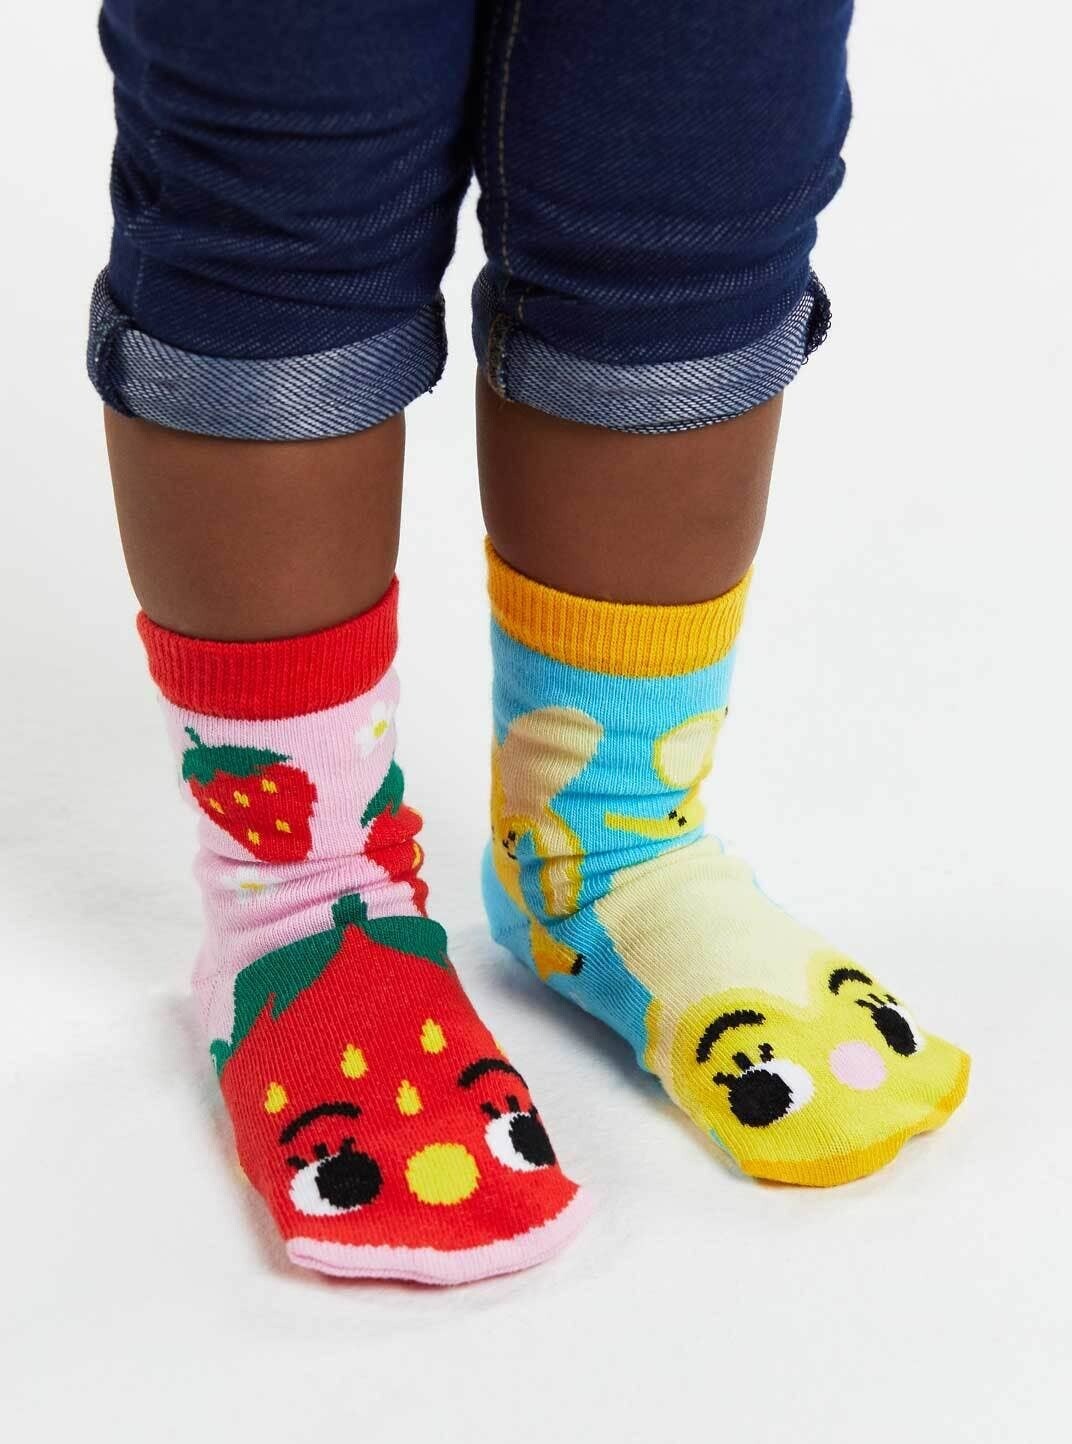 Pals Socks - Strawberry & Banana | Kids Socks | Mismatched Fun Socks